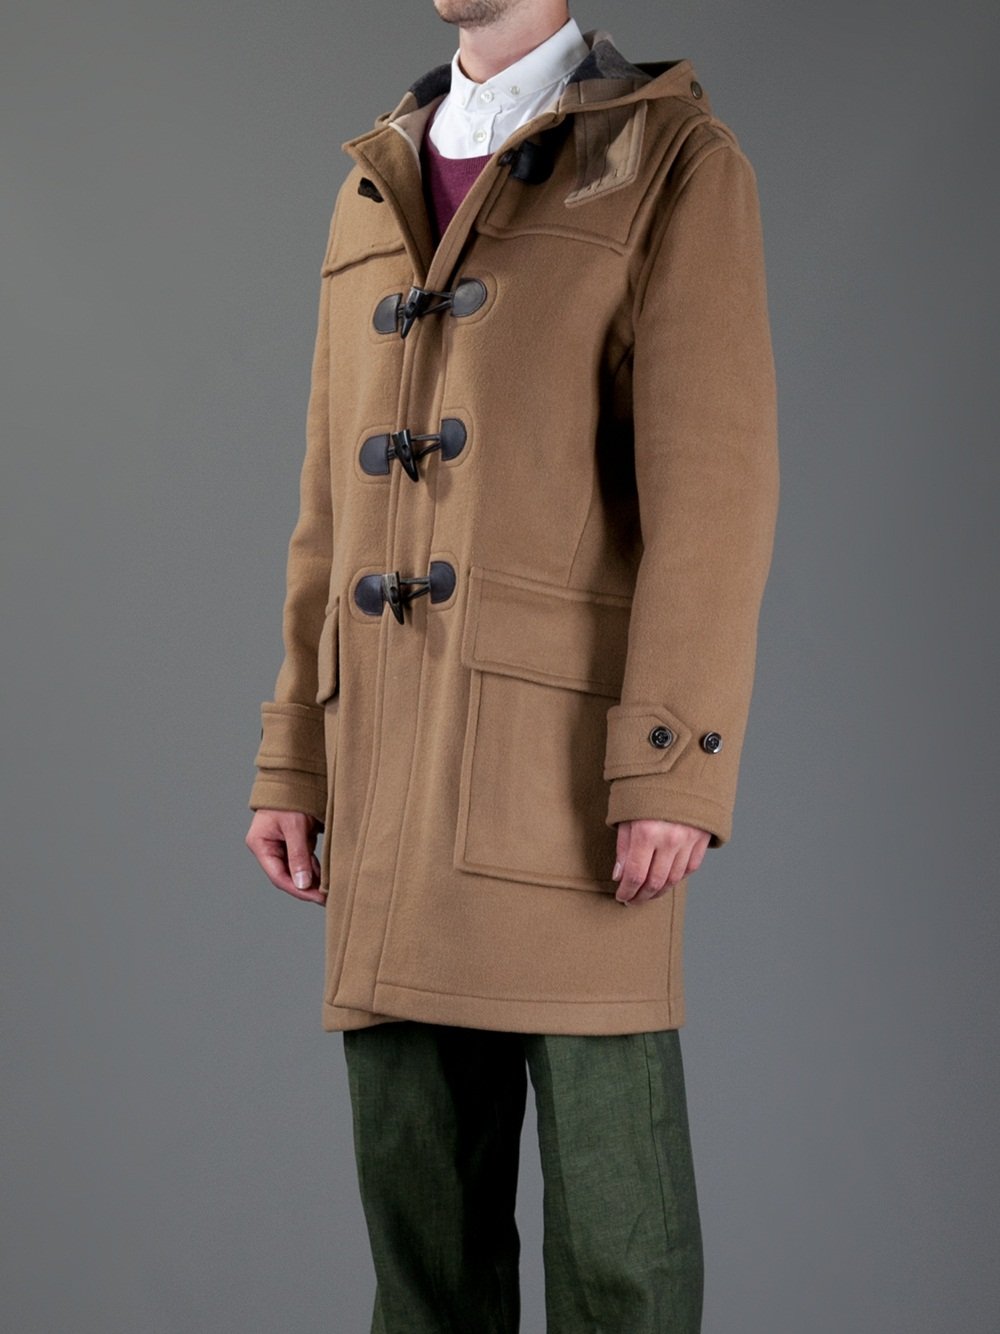 Lyst - Burberry Brit Classic Duffle Coat in Brown for Men